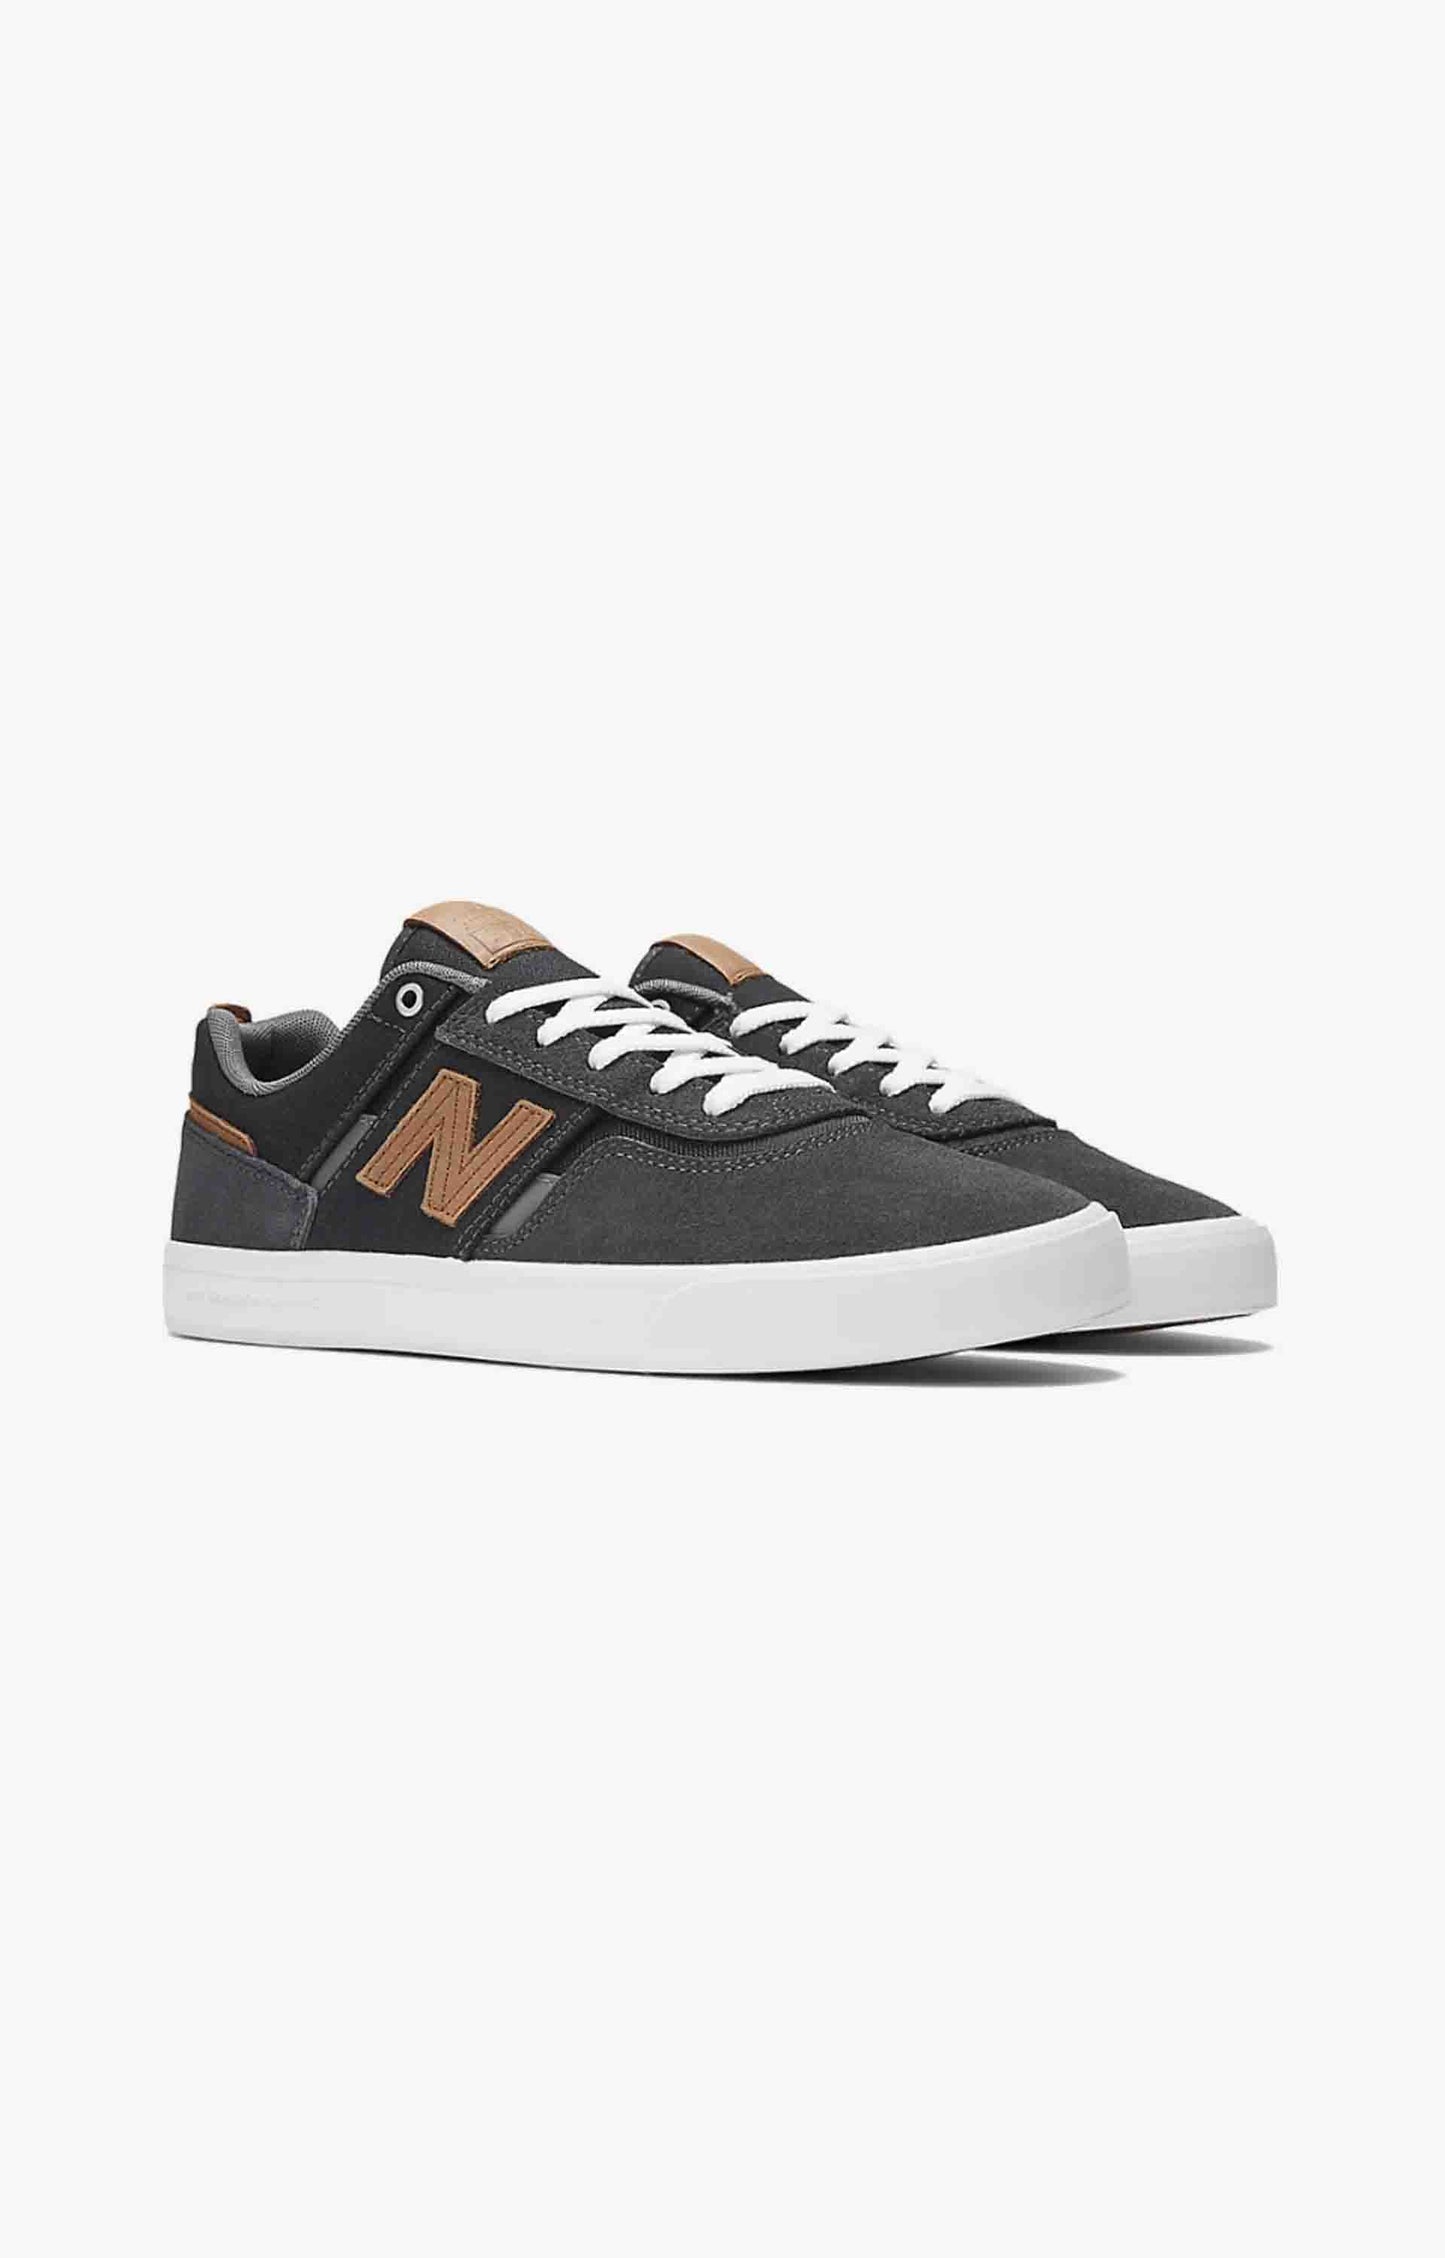 New Balance Numeric Jamie Foy NM306SNL Shoe, Phantom/Brown